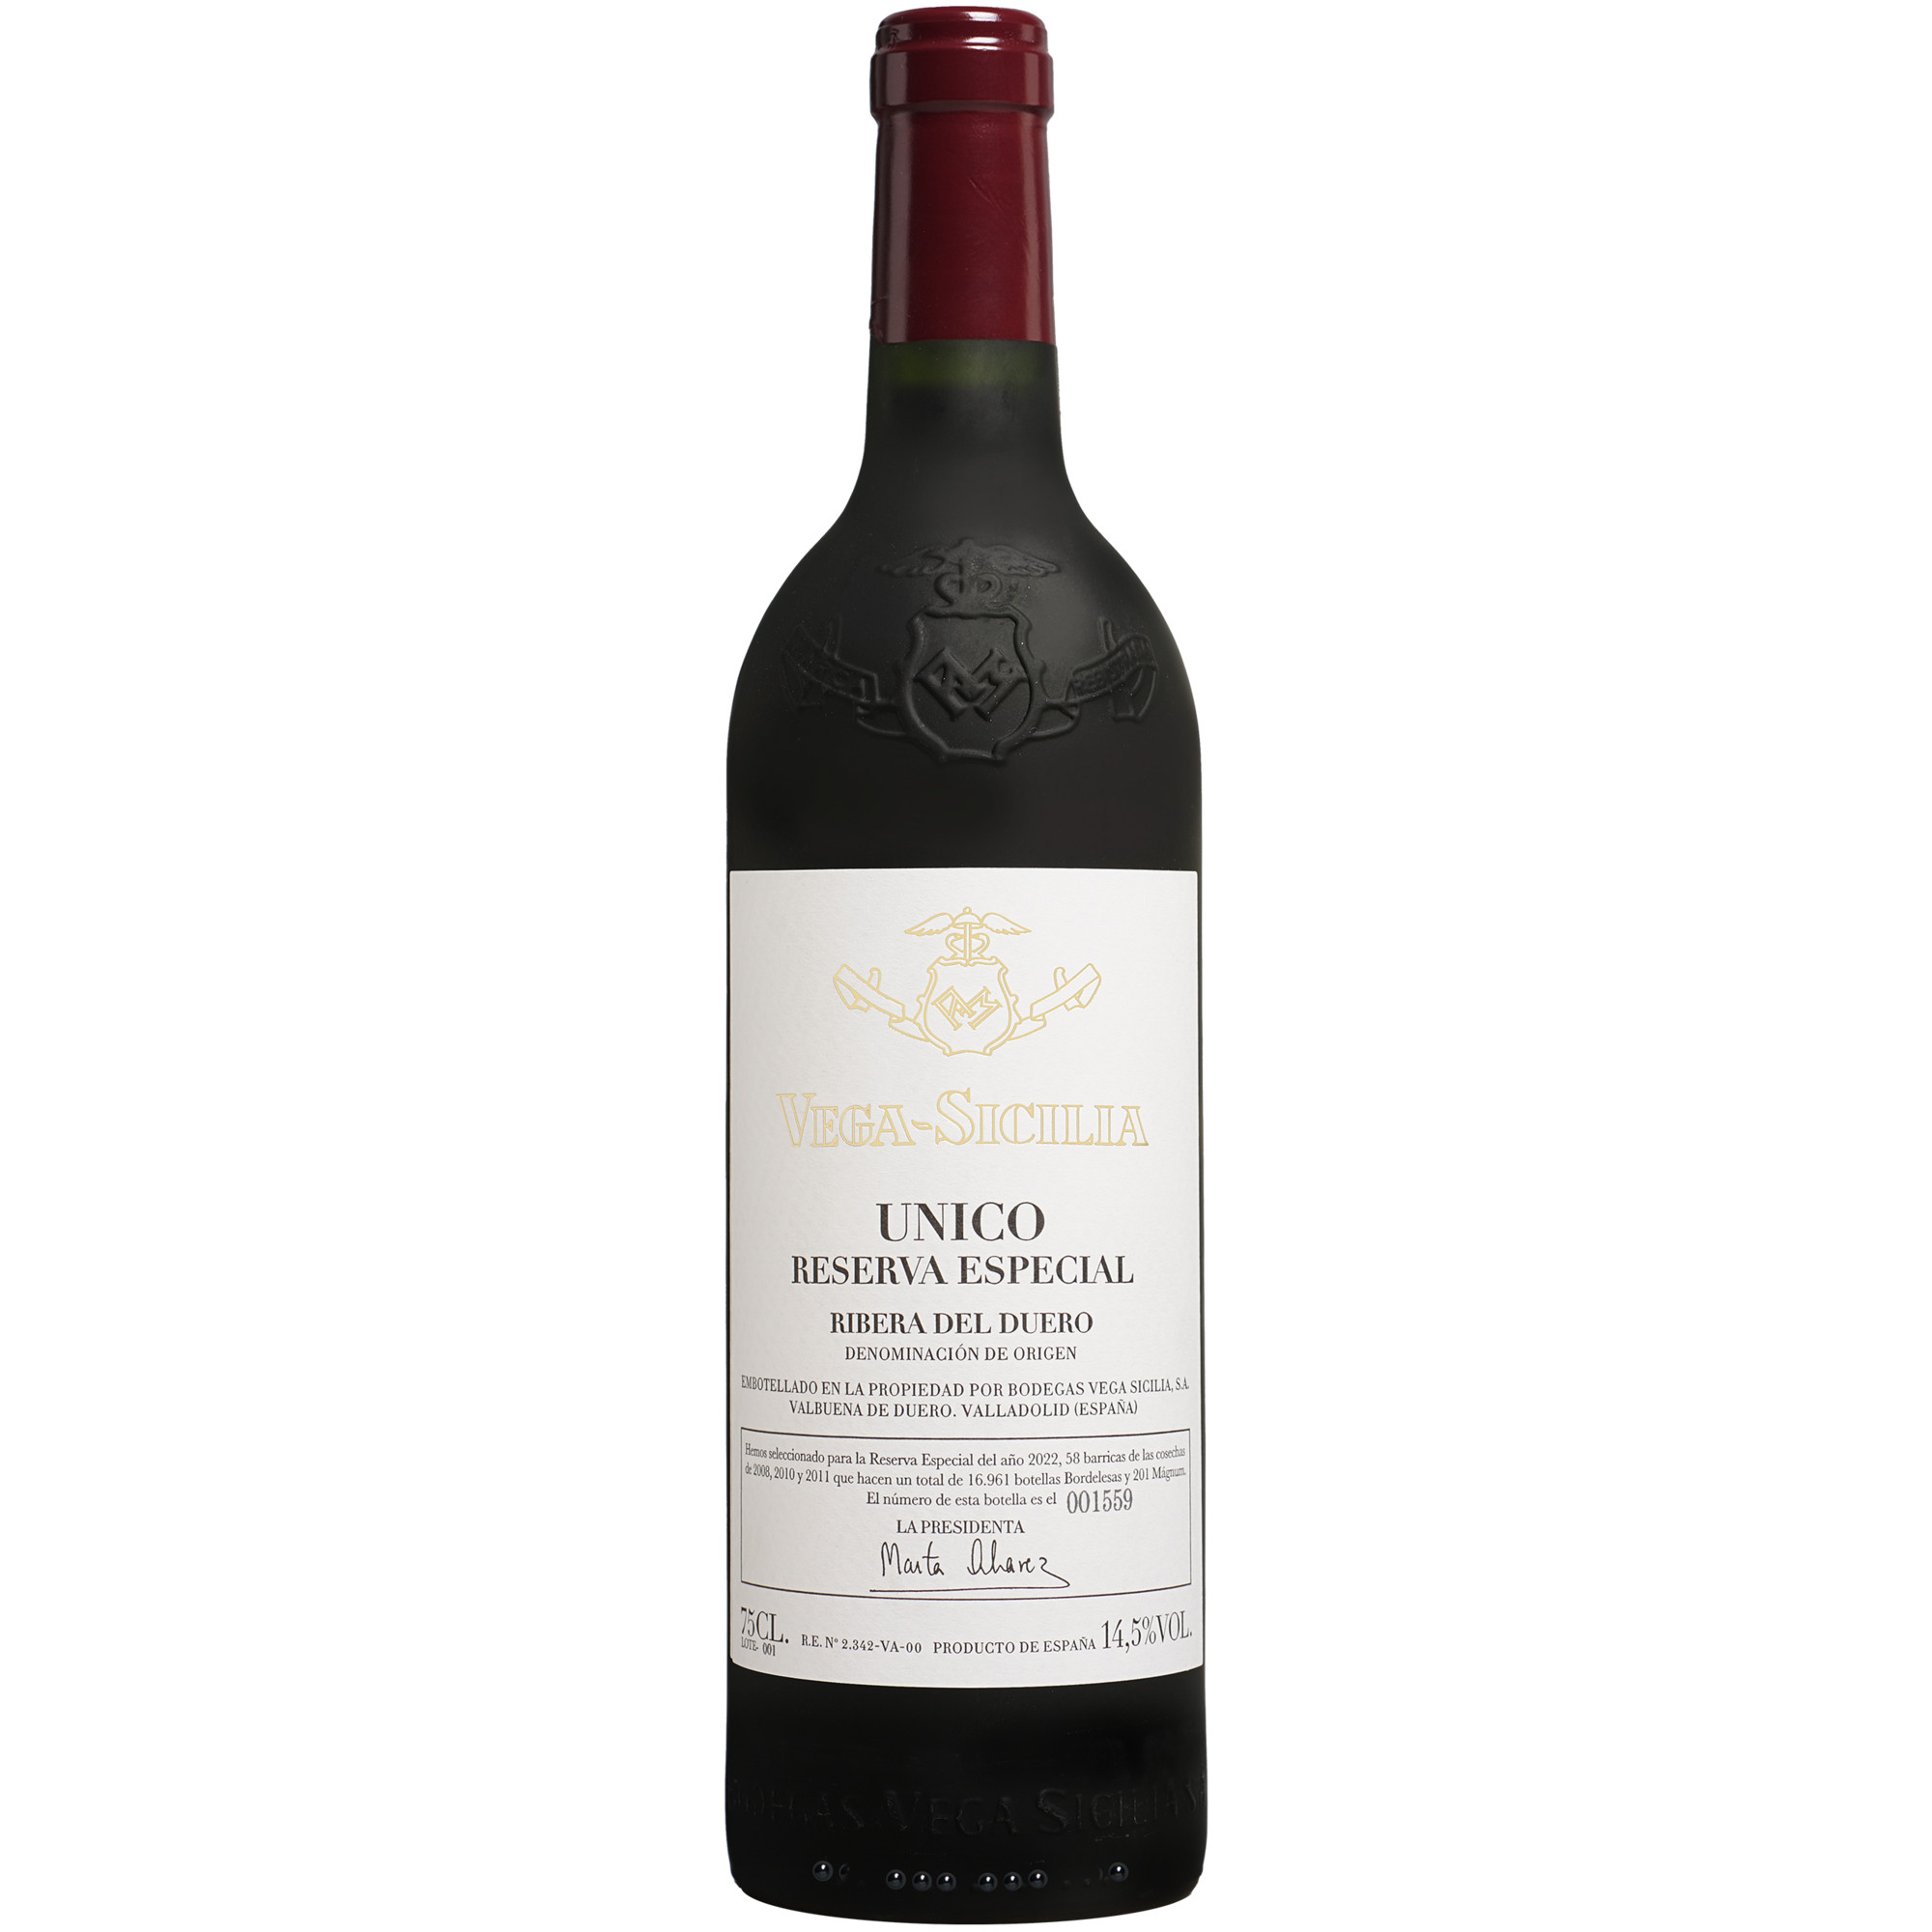 Vega Sicilia »Único« Reserva Especial (08 10 11)  014.5% Vol. Rotwein Trocken aus Spanien